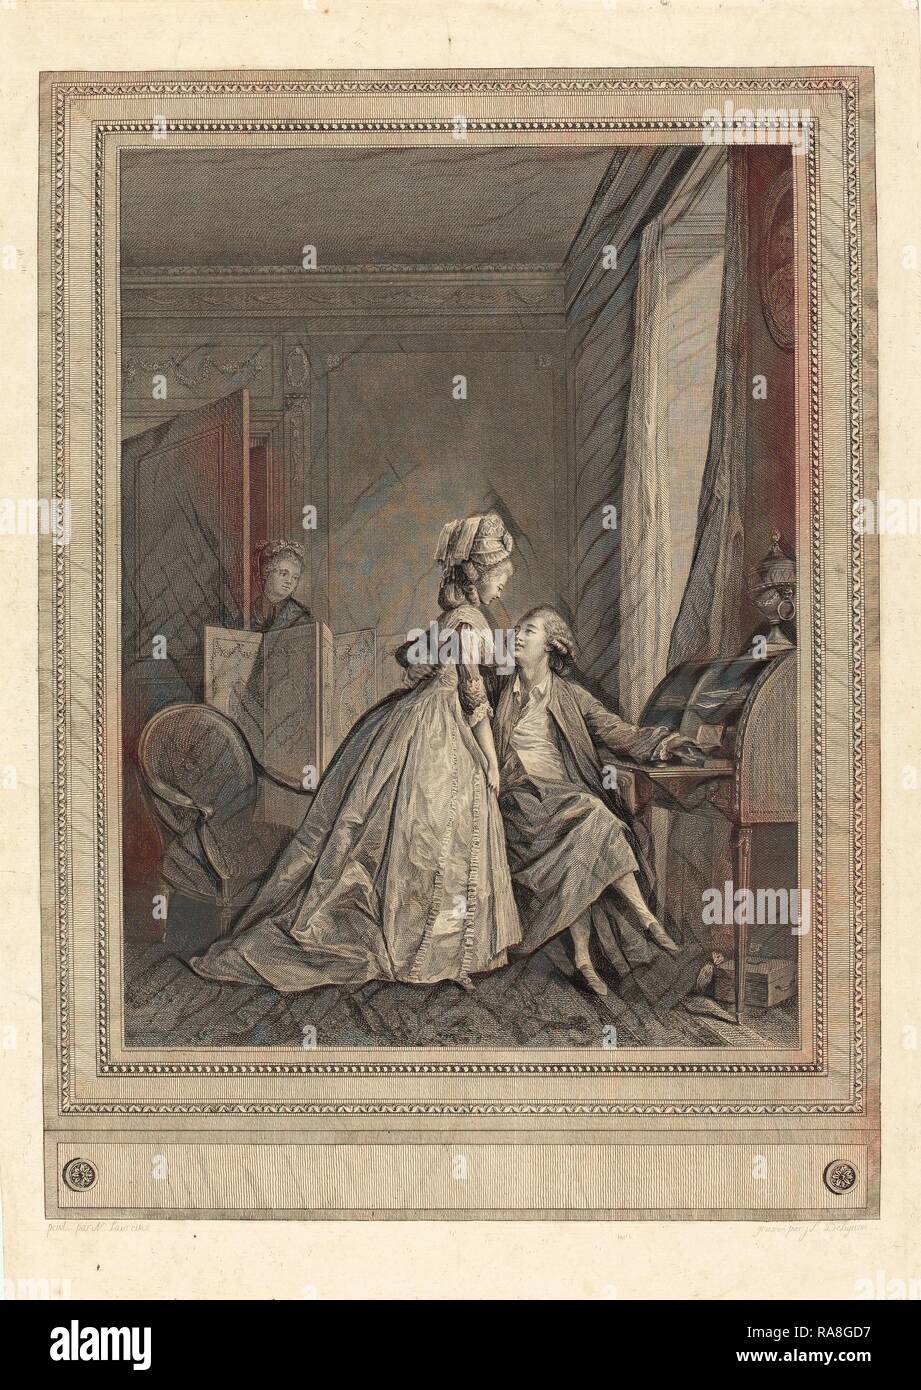 Jean-Louis Delignon dopo Nicolas Lavreince (francese, 1755 - c. 1804), Les offres seduisantes, 1782, incisione e reinventato Foto Stock